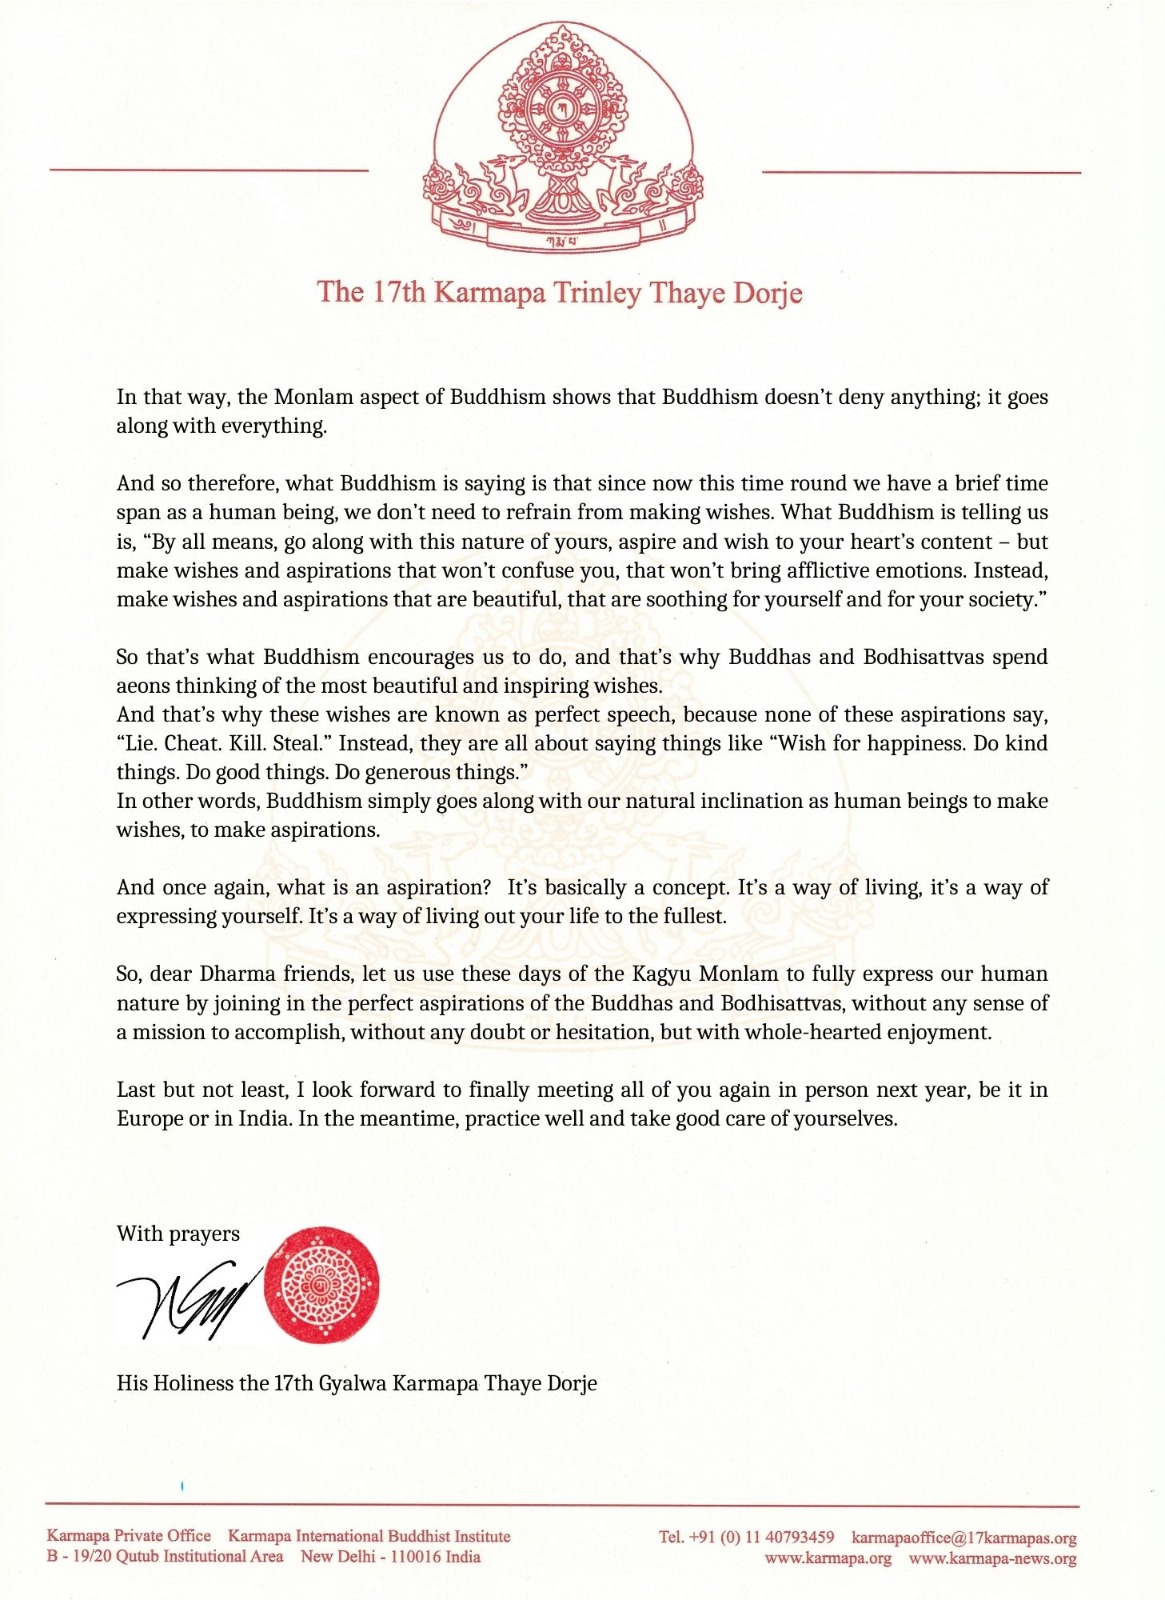 Kagyu Monlam 2022 message from Thaye Dorje, His Holiness the 17th Gyalwa Karmapa, page 3